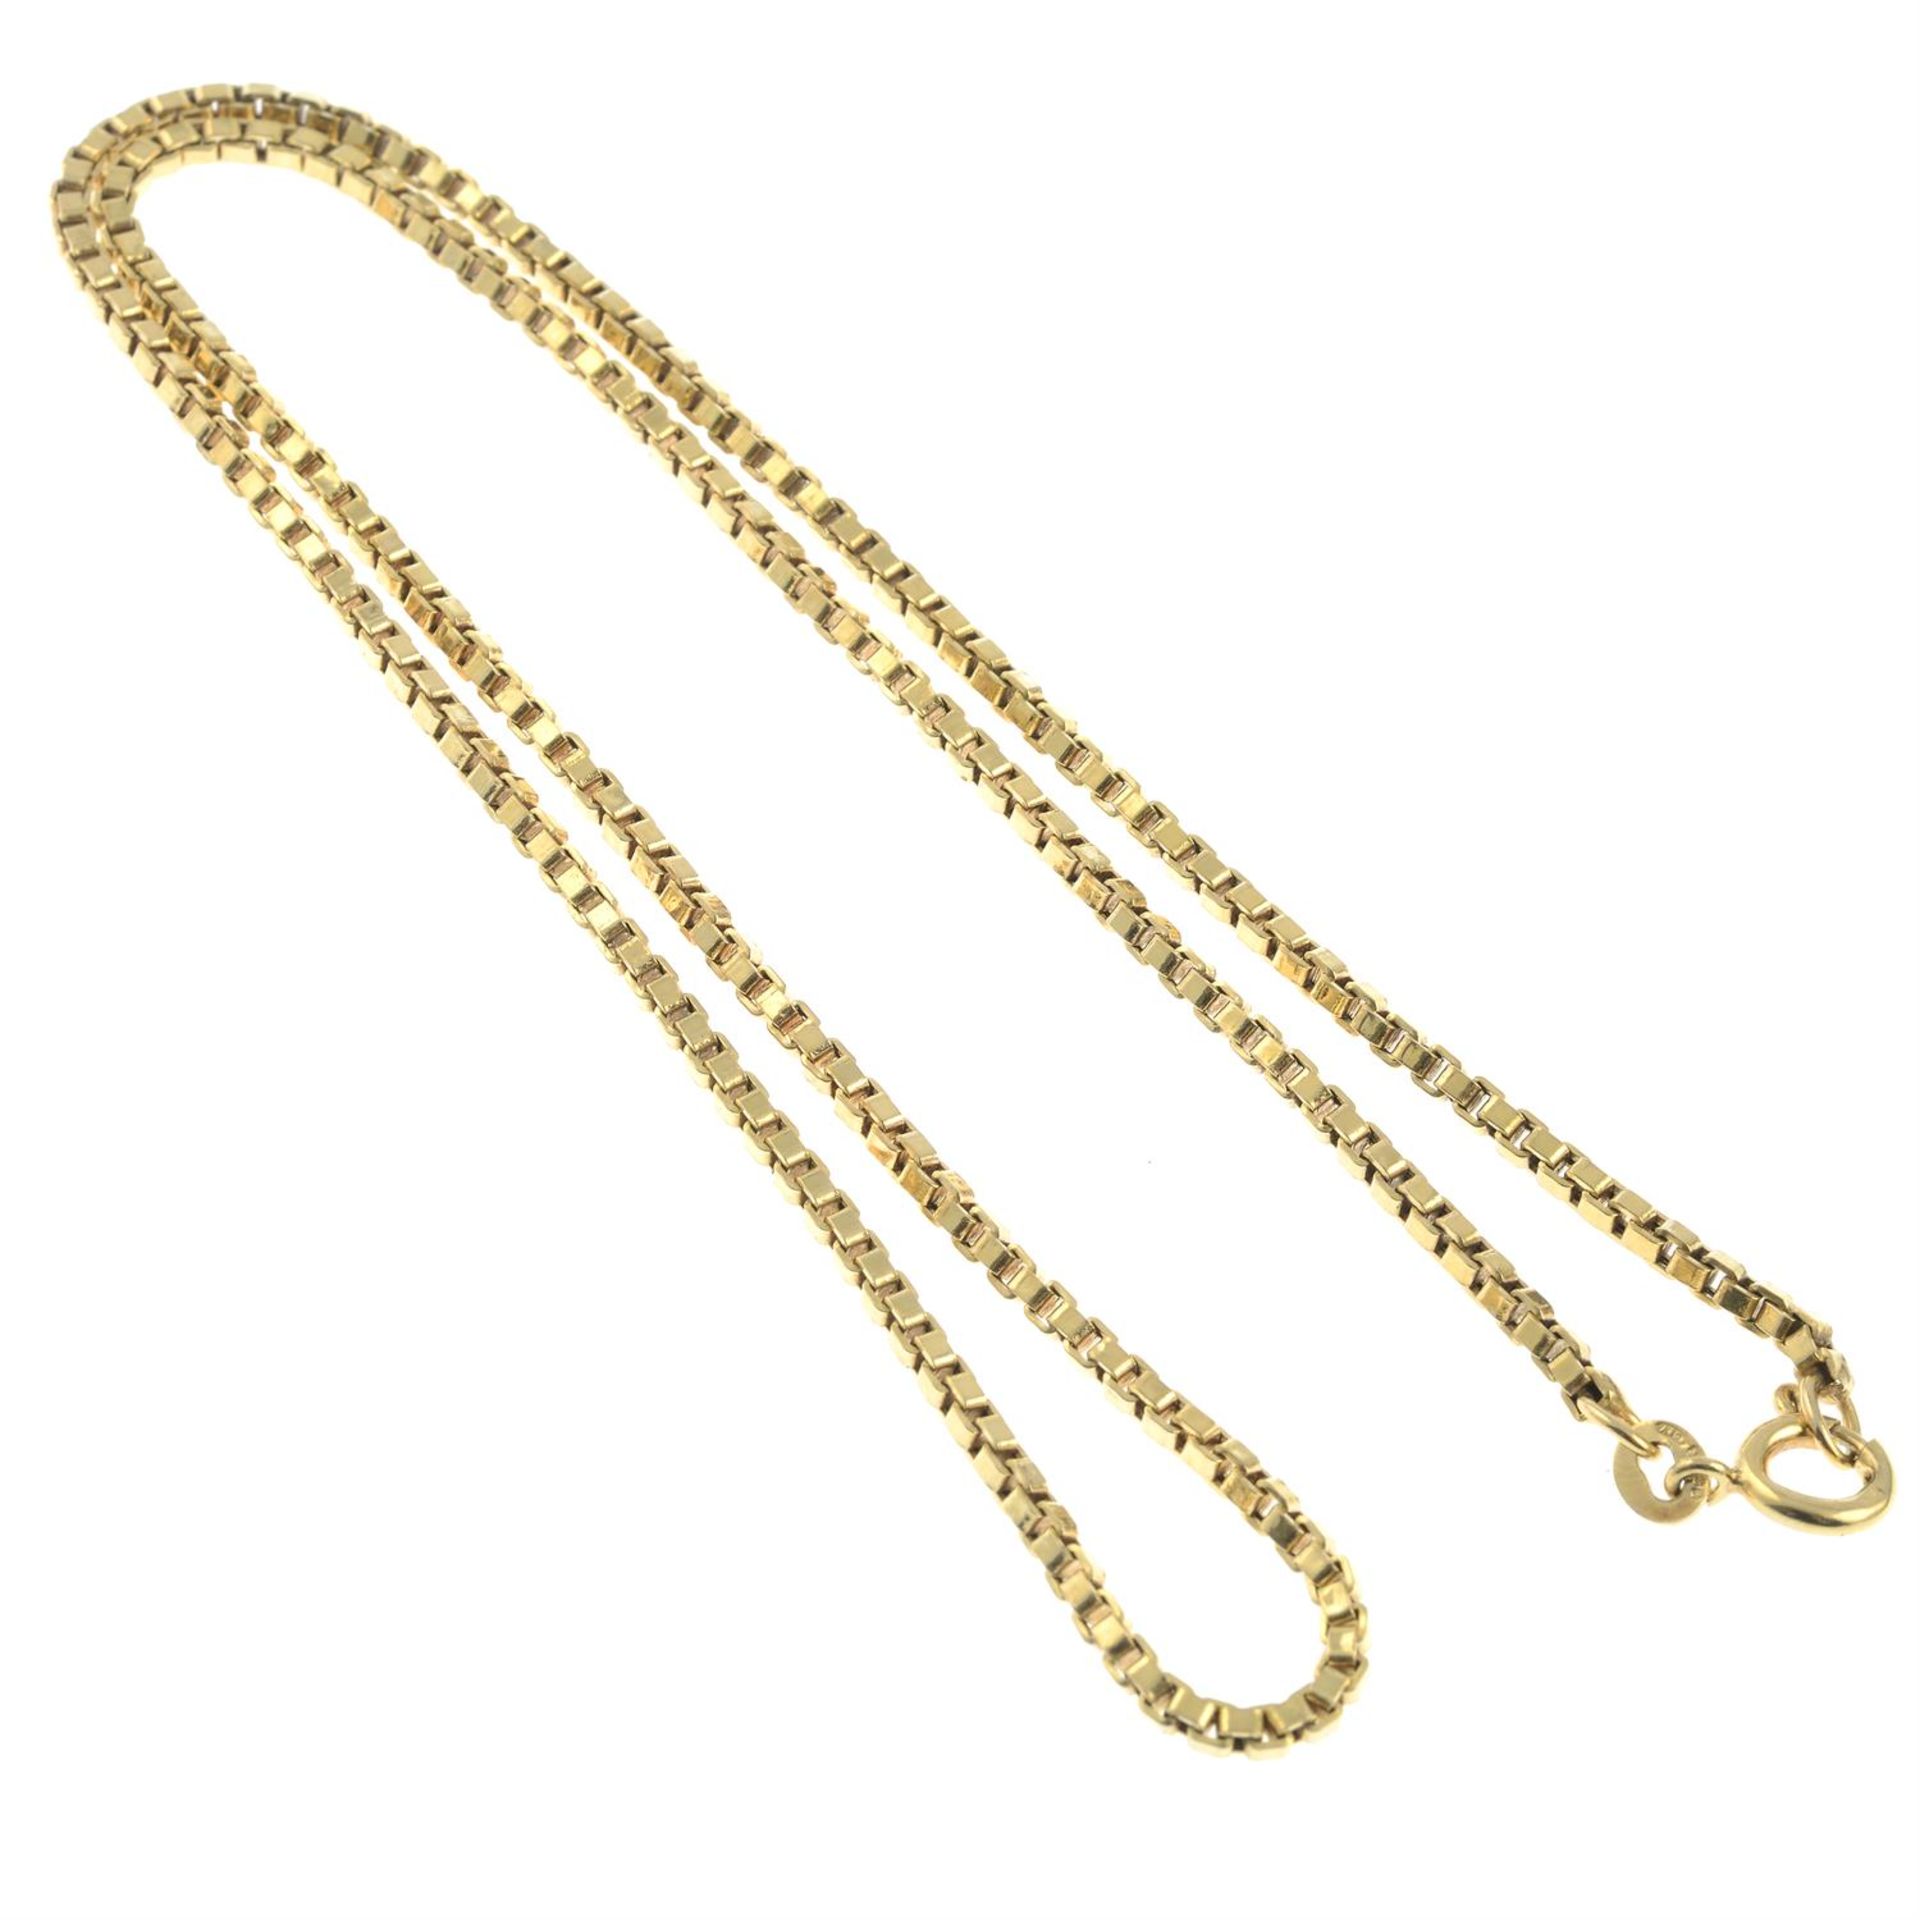 A 9ct gold square-shape link necklace.